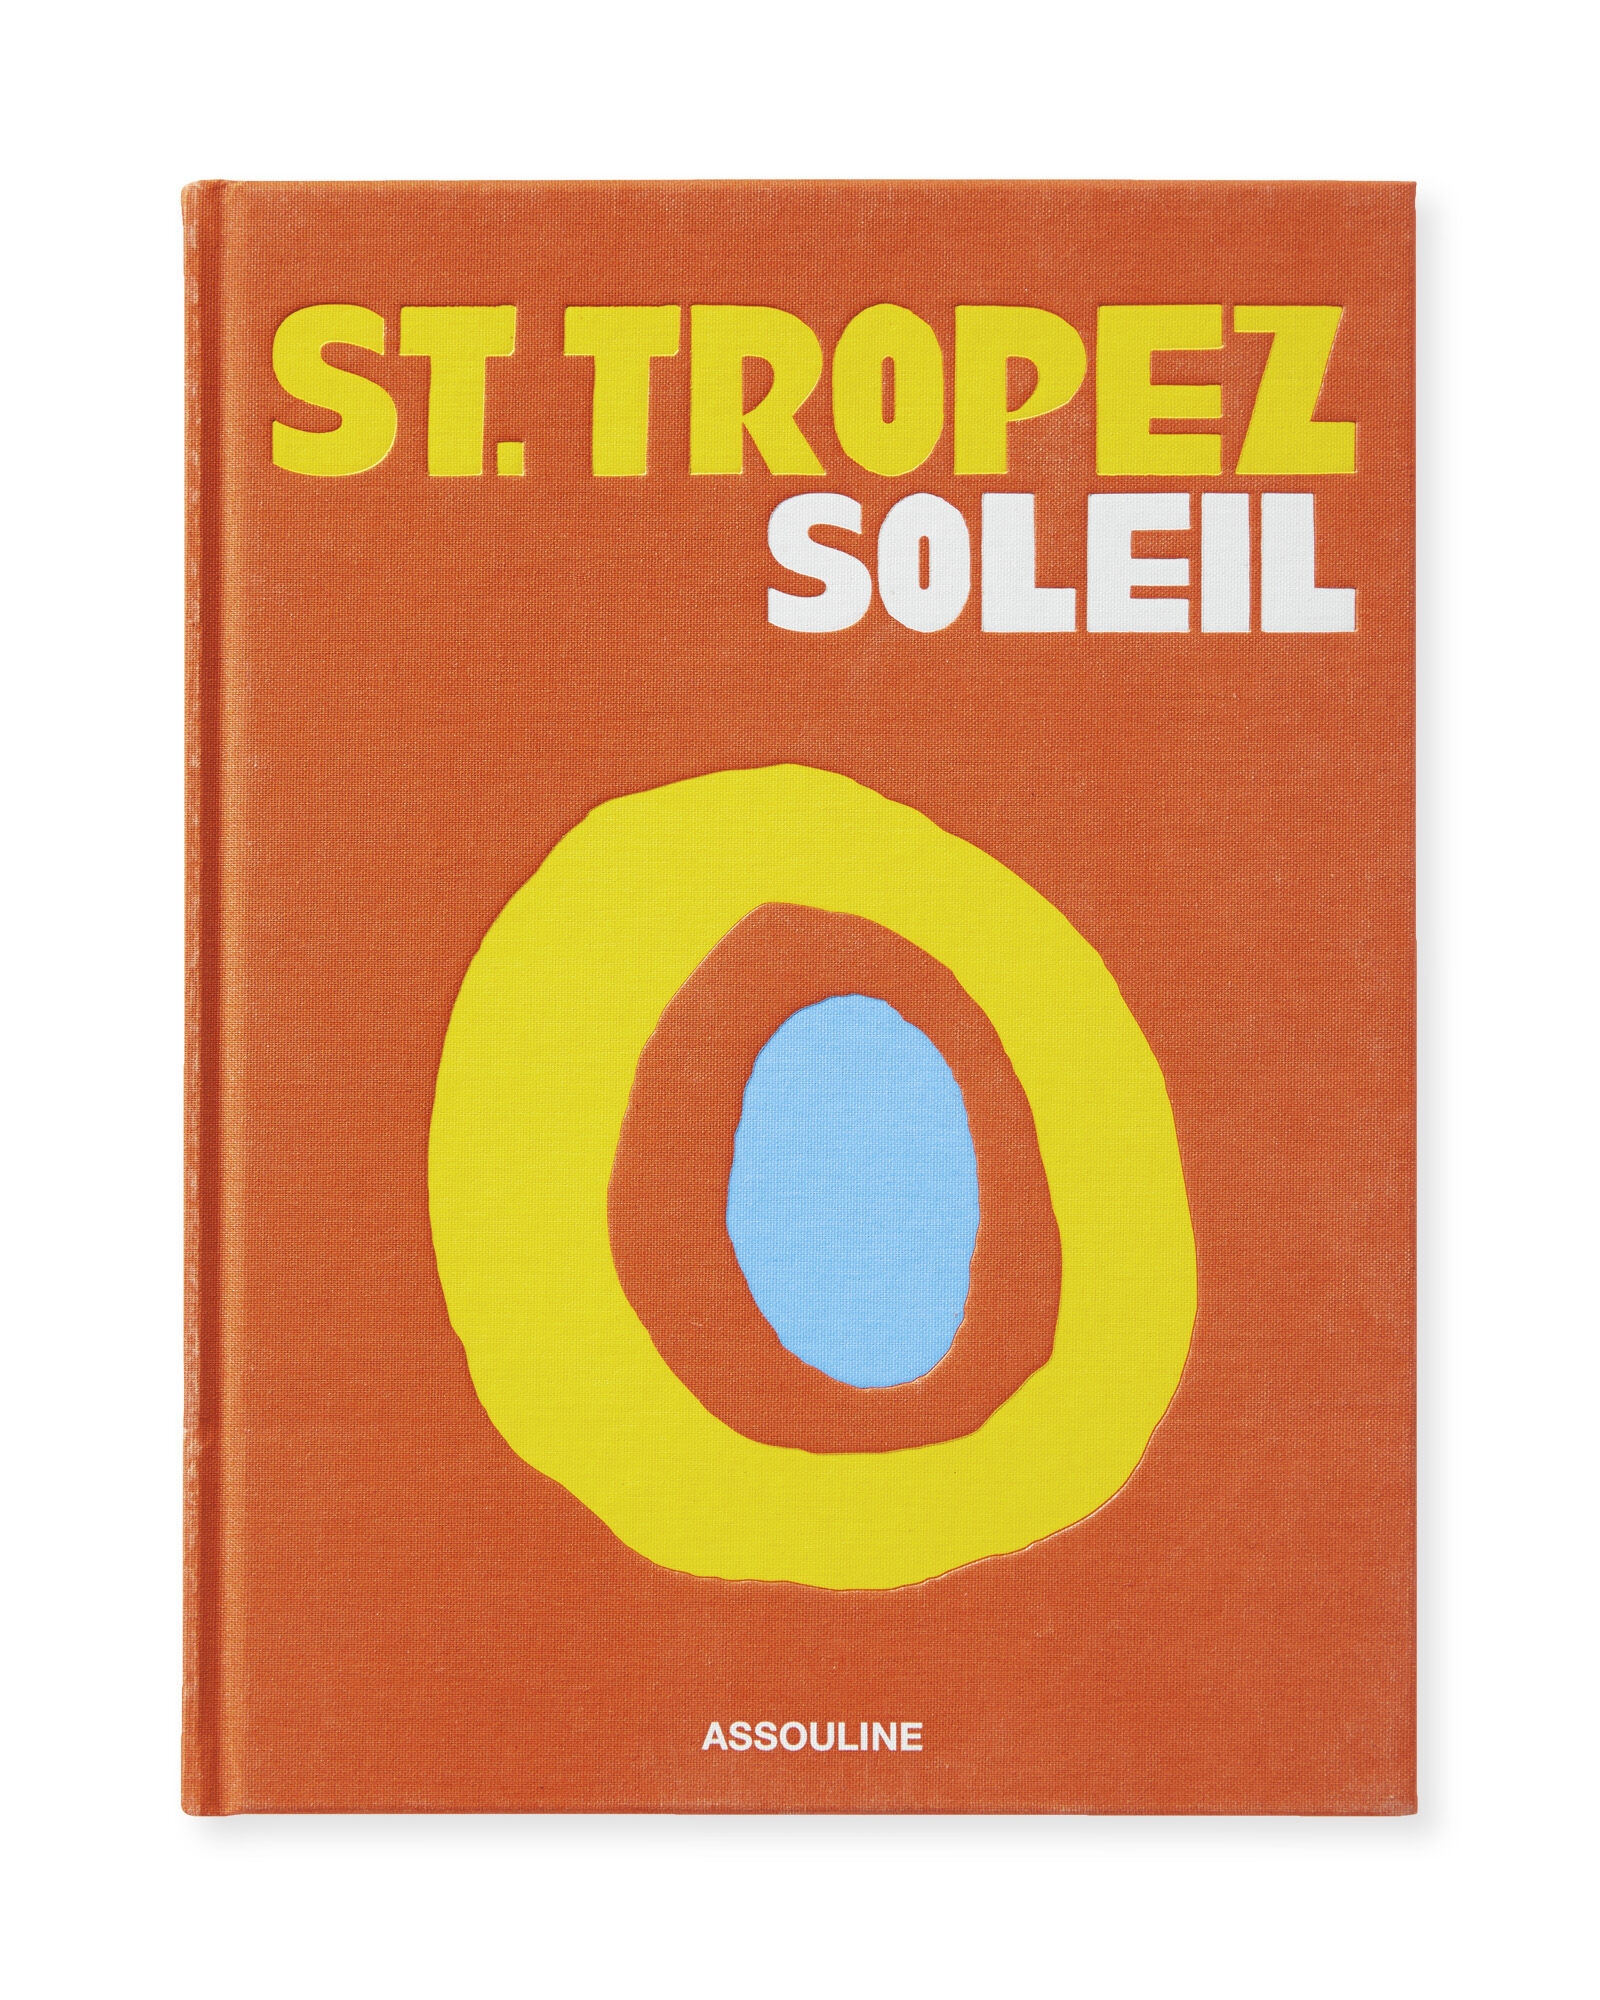 "St. Tropez Soleil" by Simon Liberati - Image 0